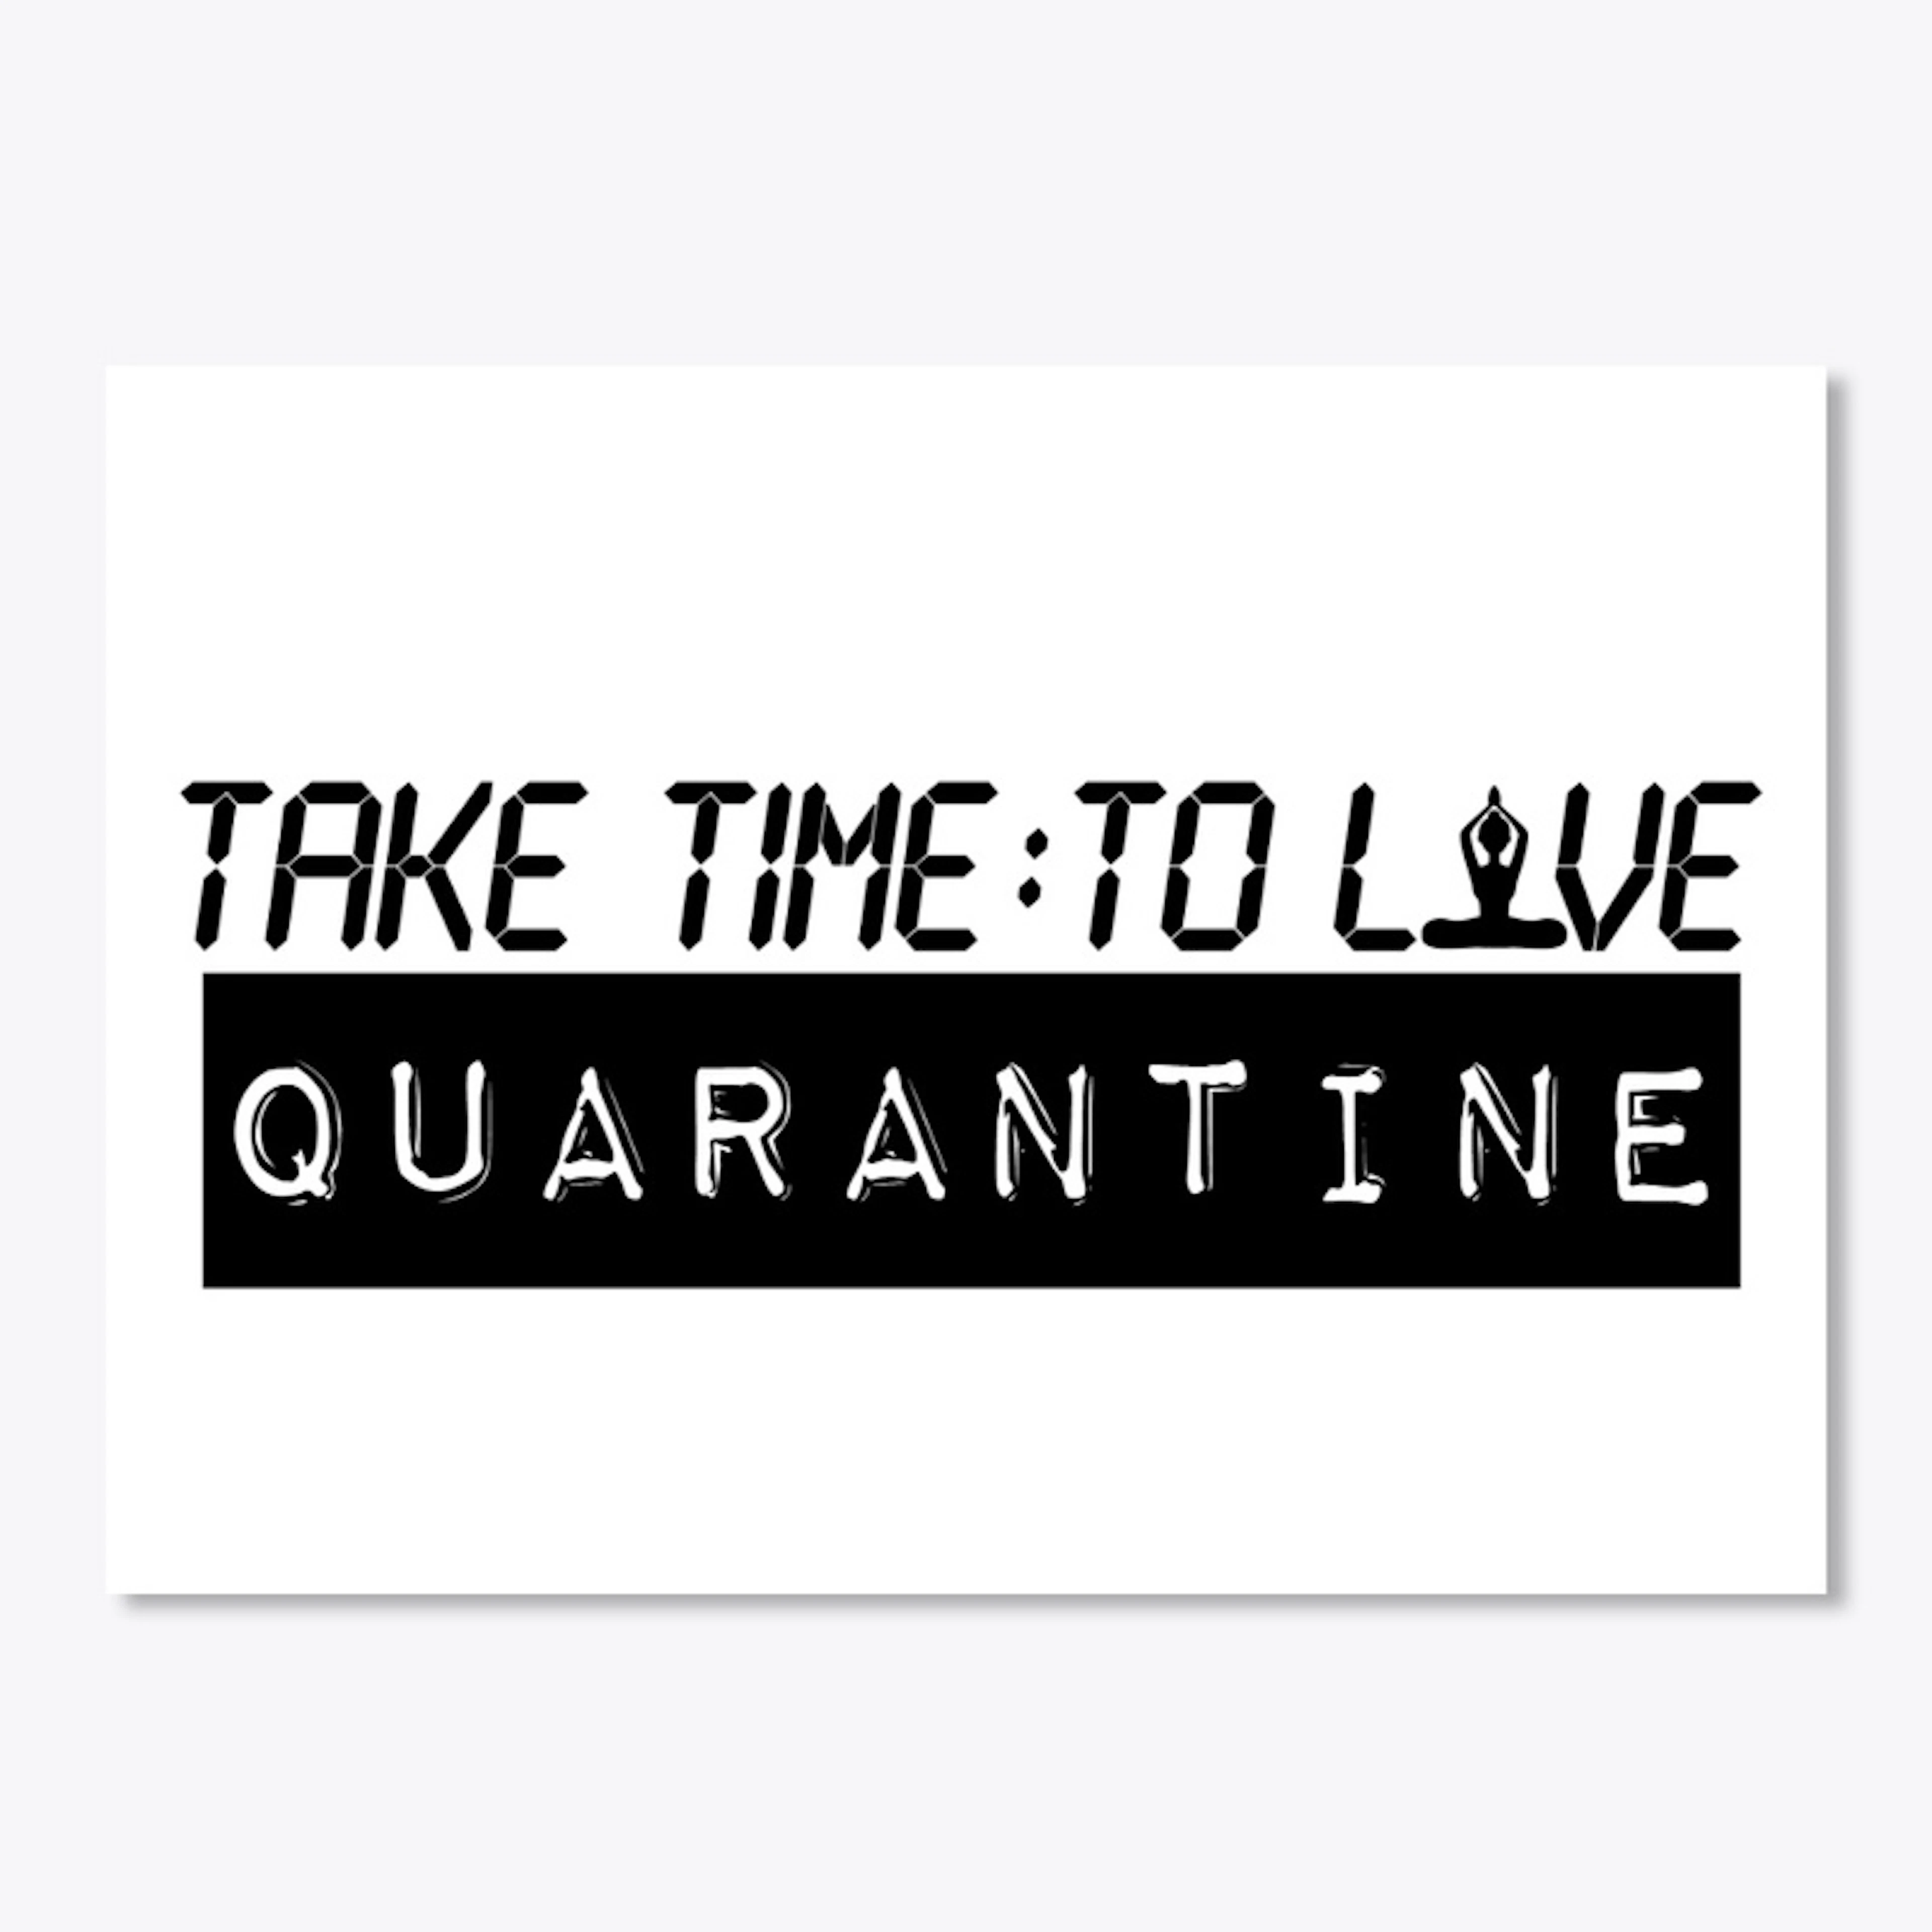 Take time to love yoga quarantine